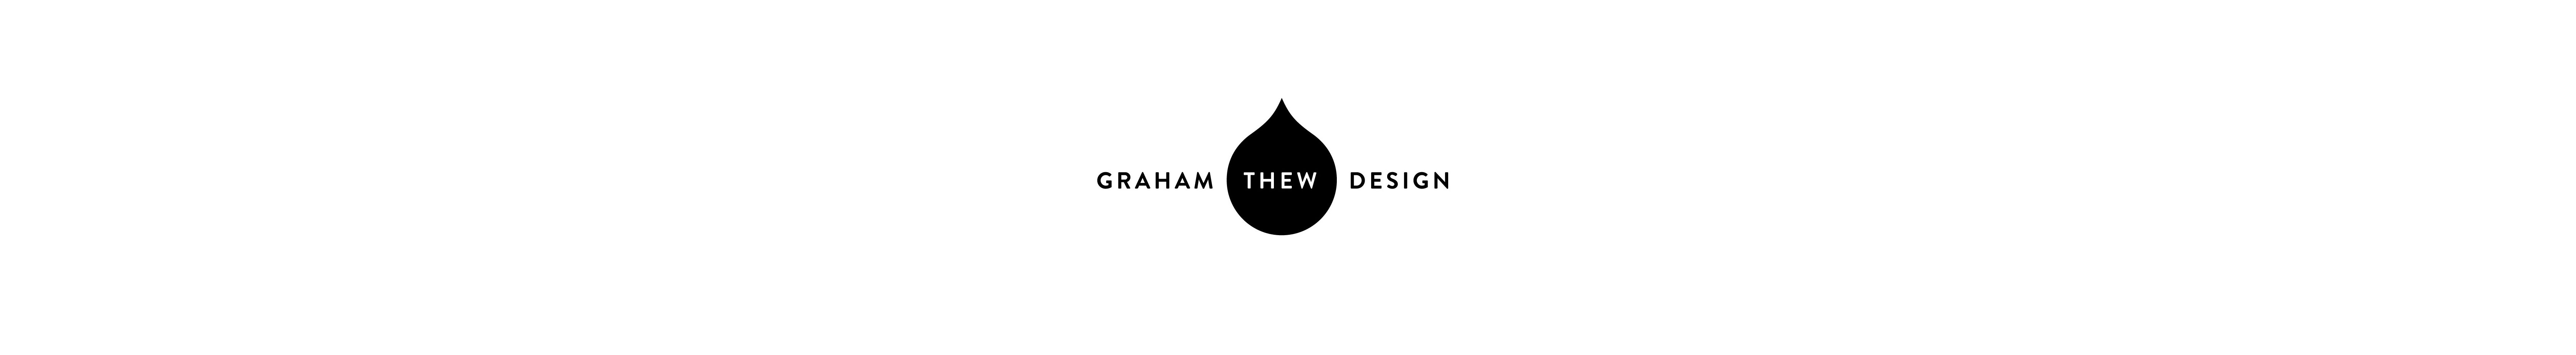 Graham Thew's profile banner